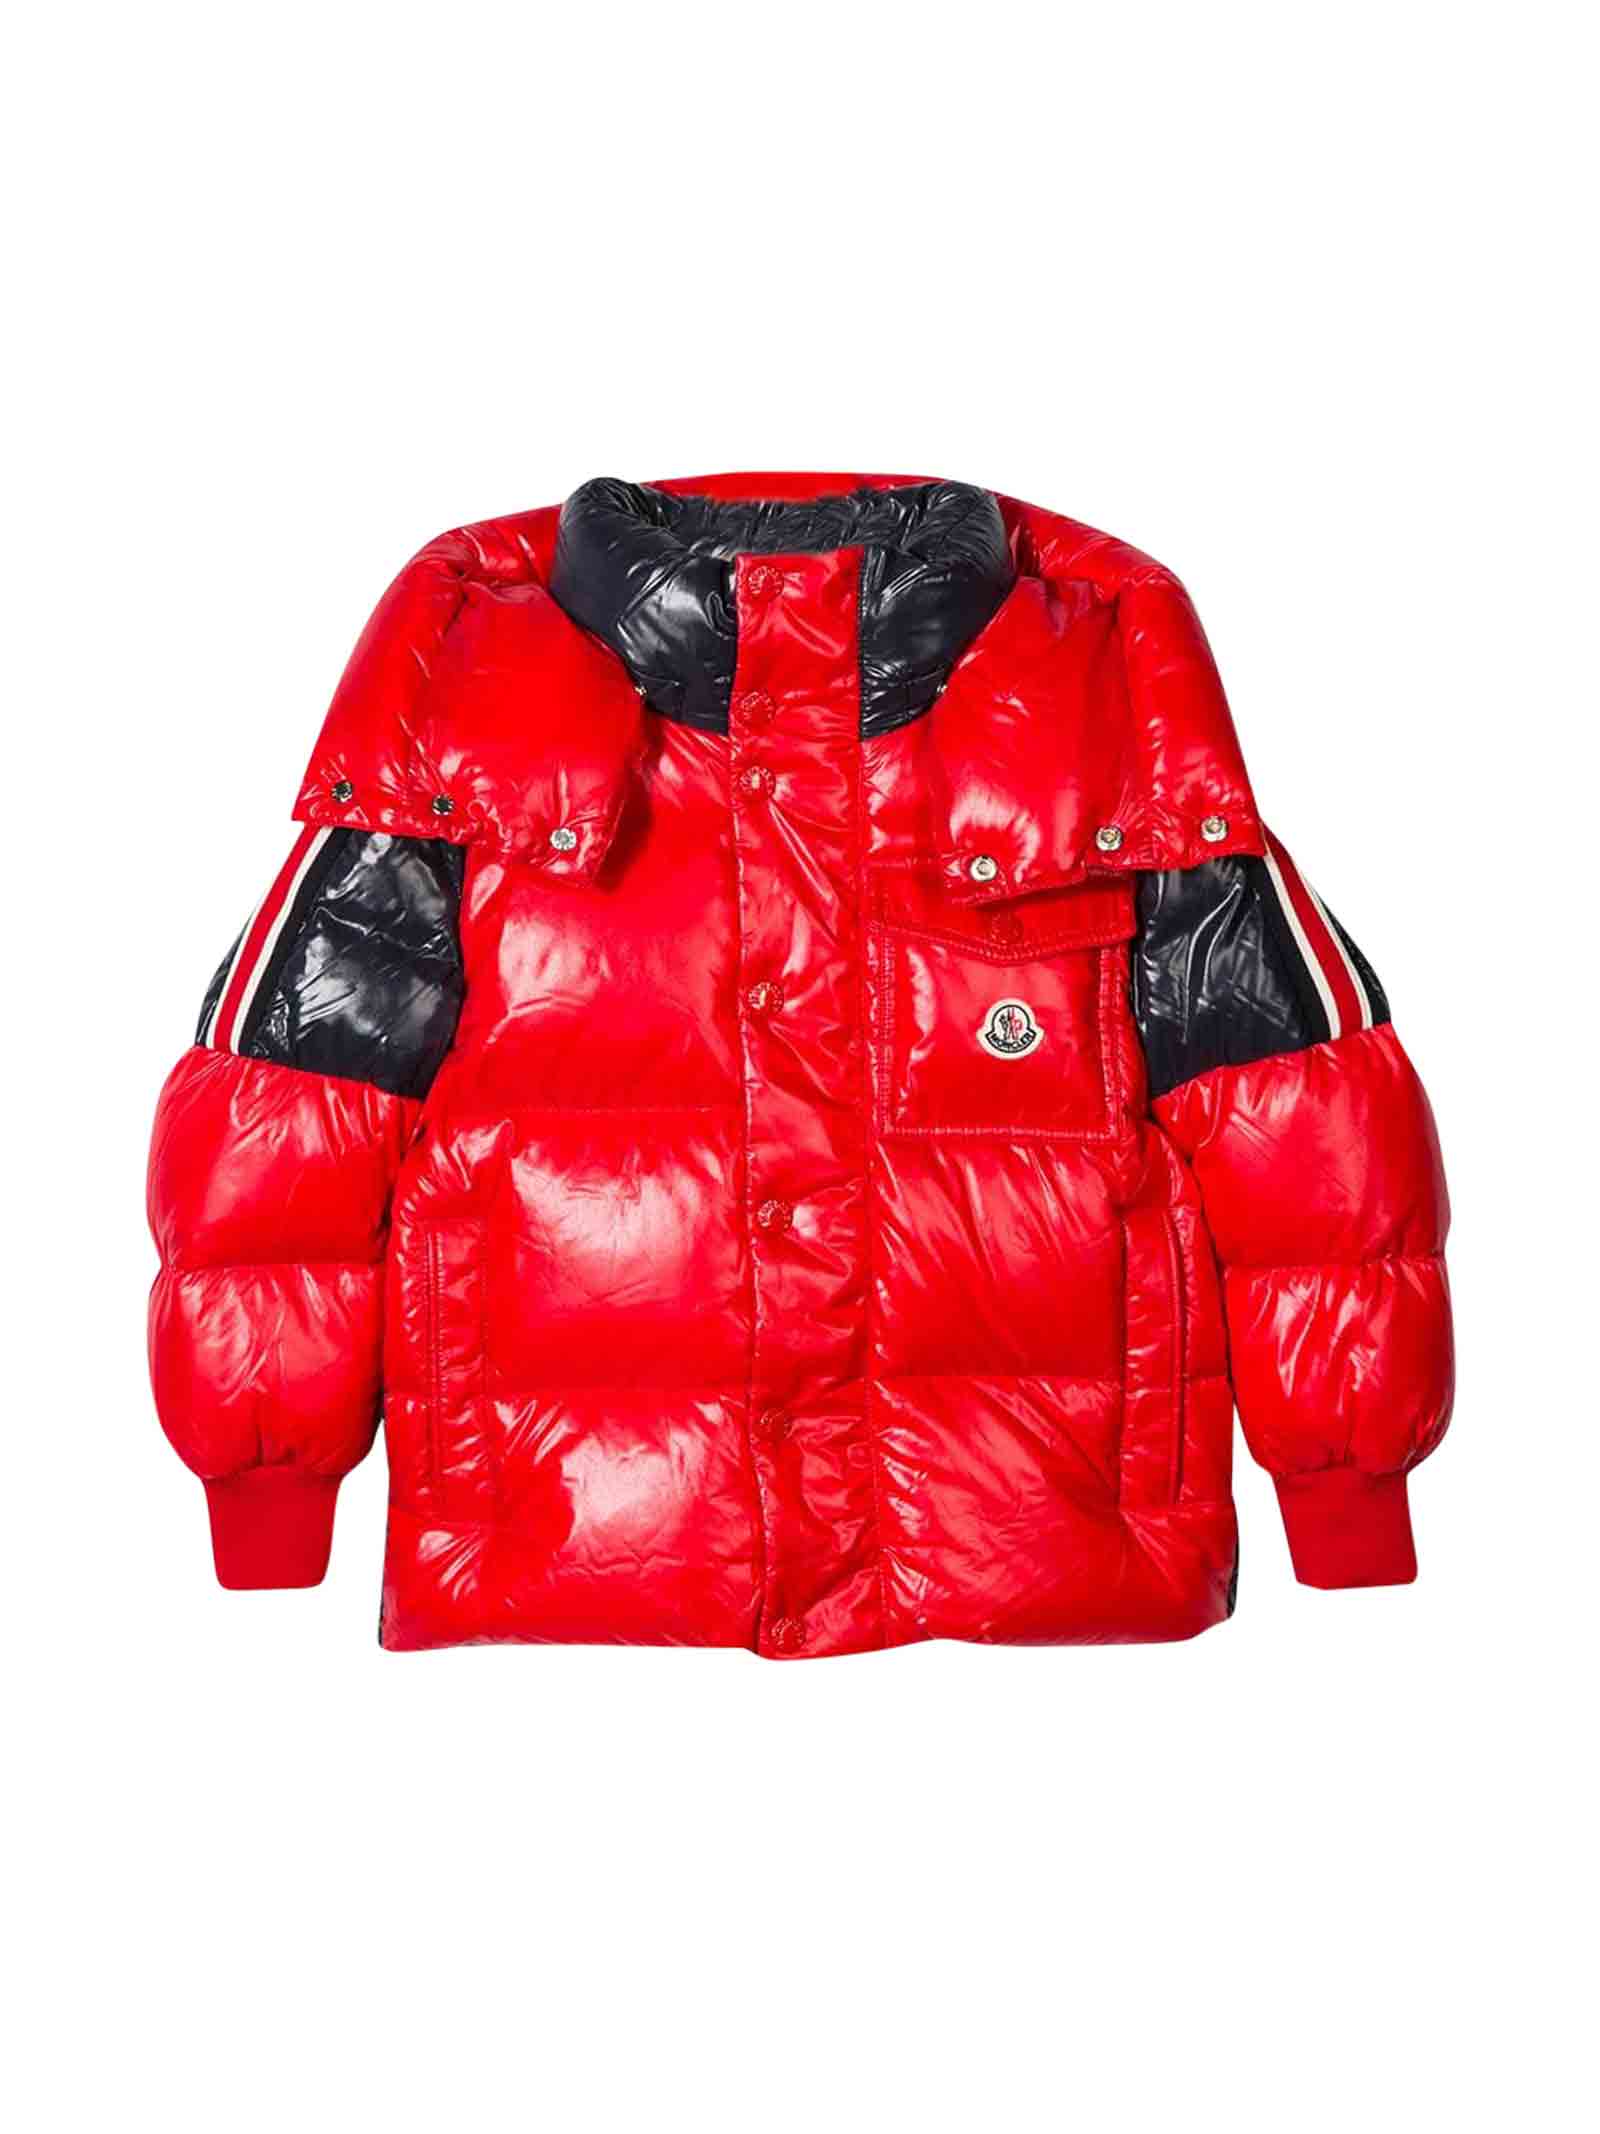 Moncler Red And Black Lightweight Jacket Sigean